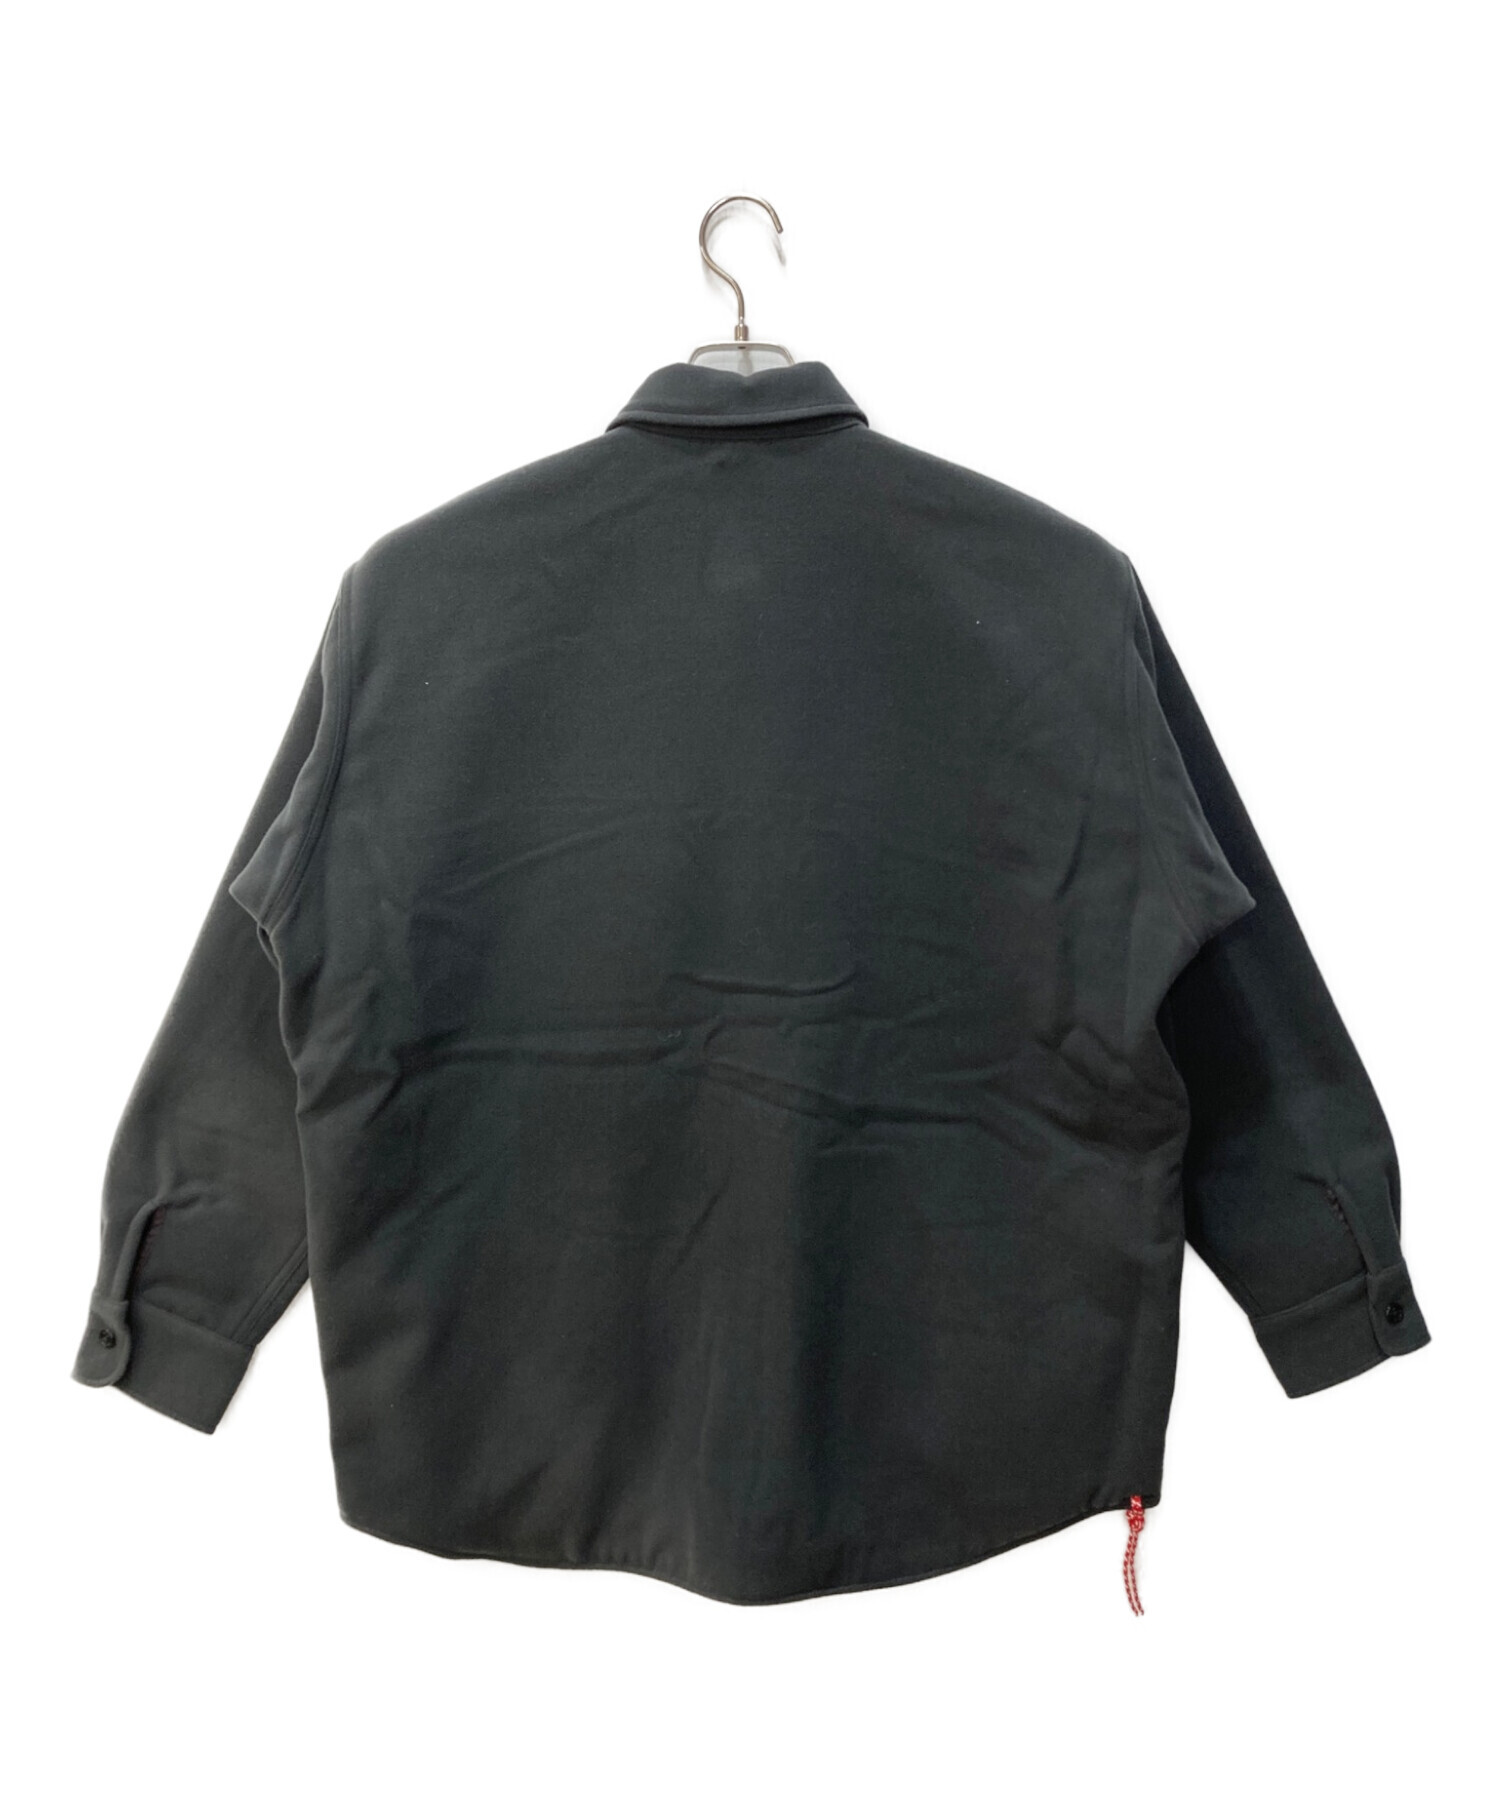 【ReZARD】CPO jacket (M) Black 未使用品